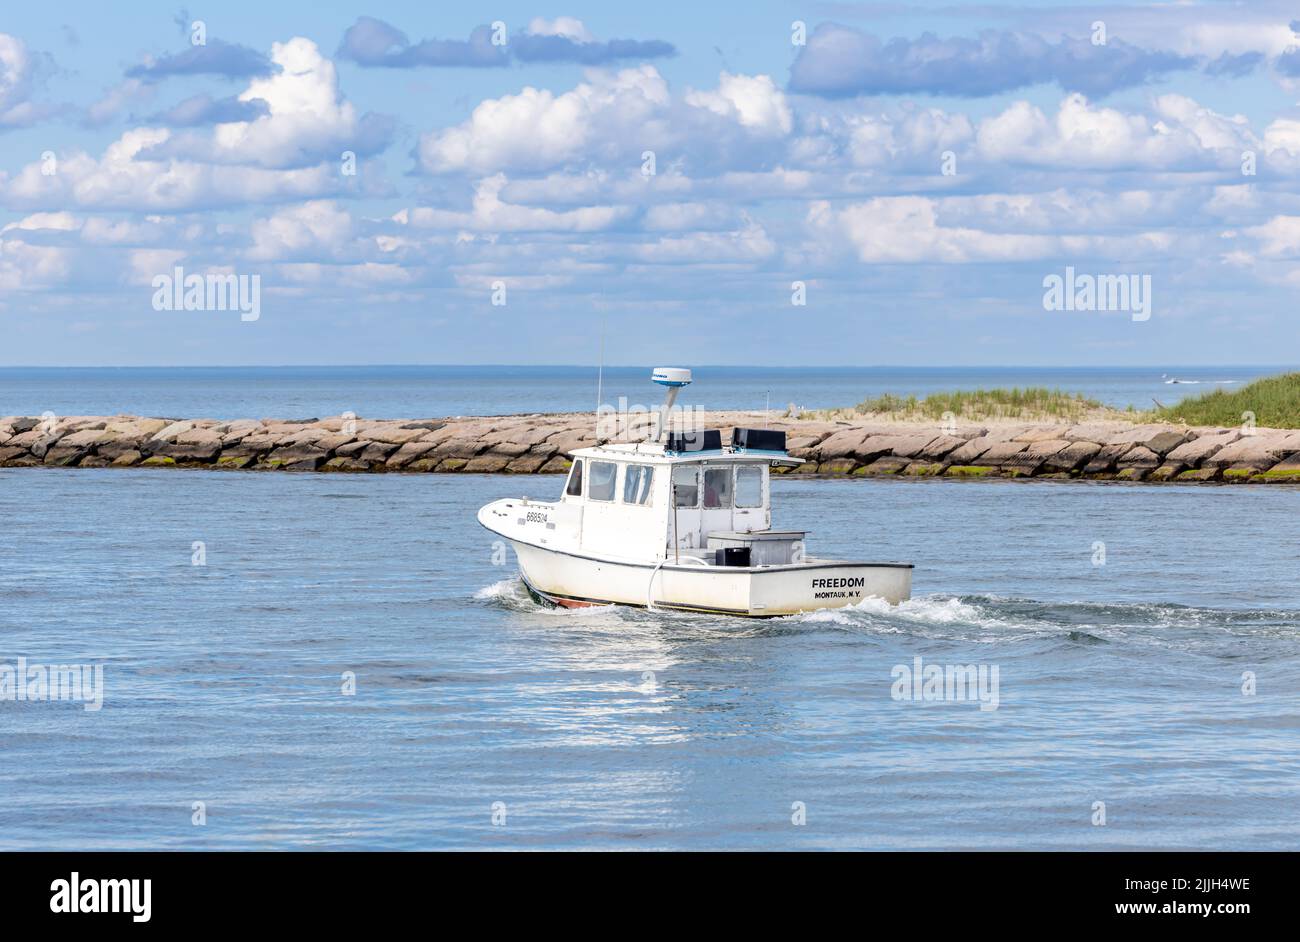 Barco de pesca, Libertad saliendo de Montauk, NY Foto de stock